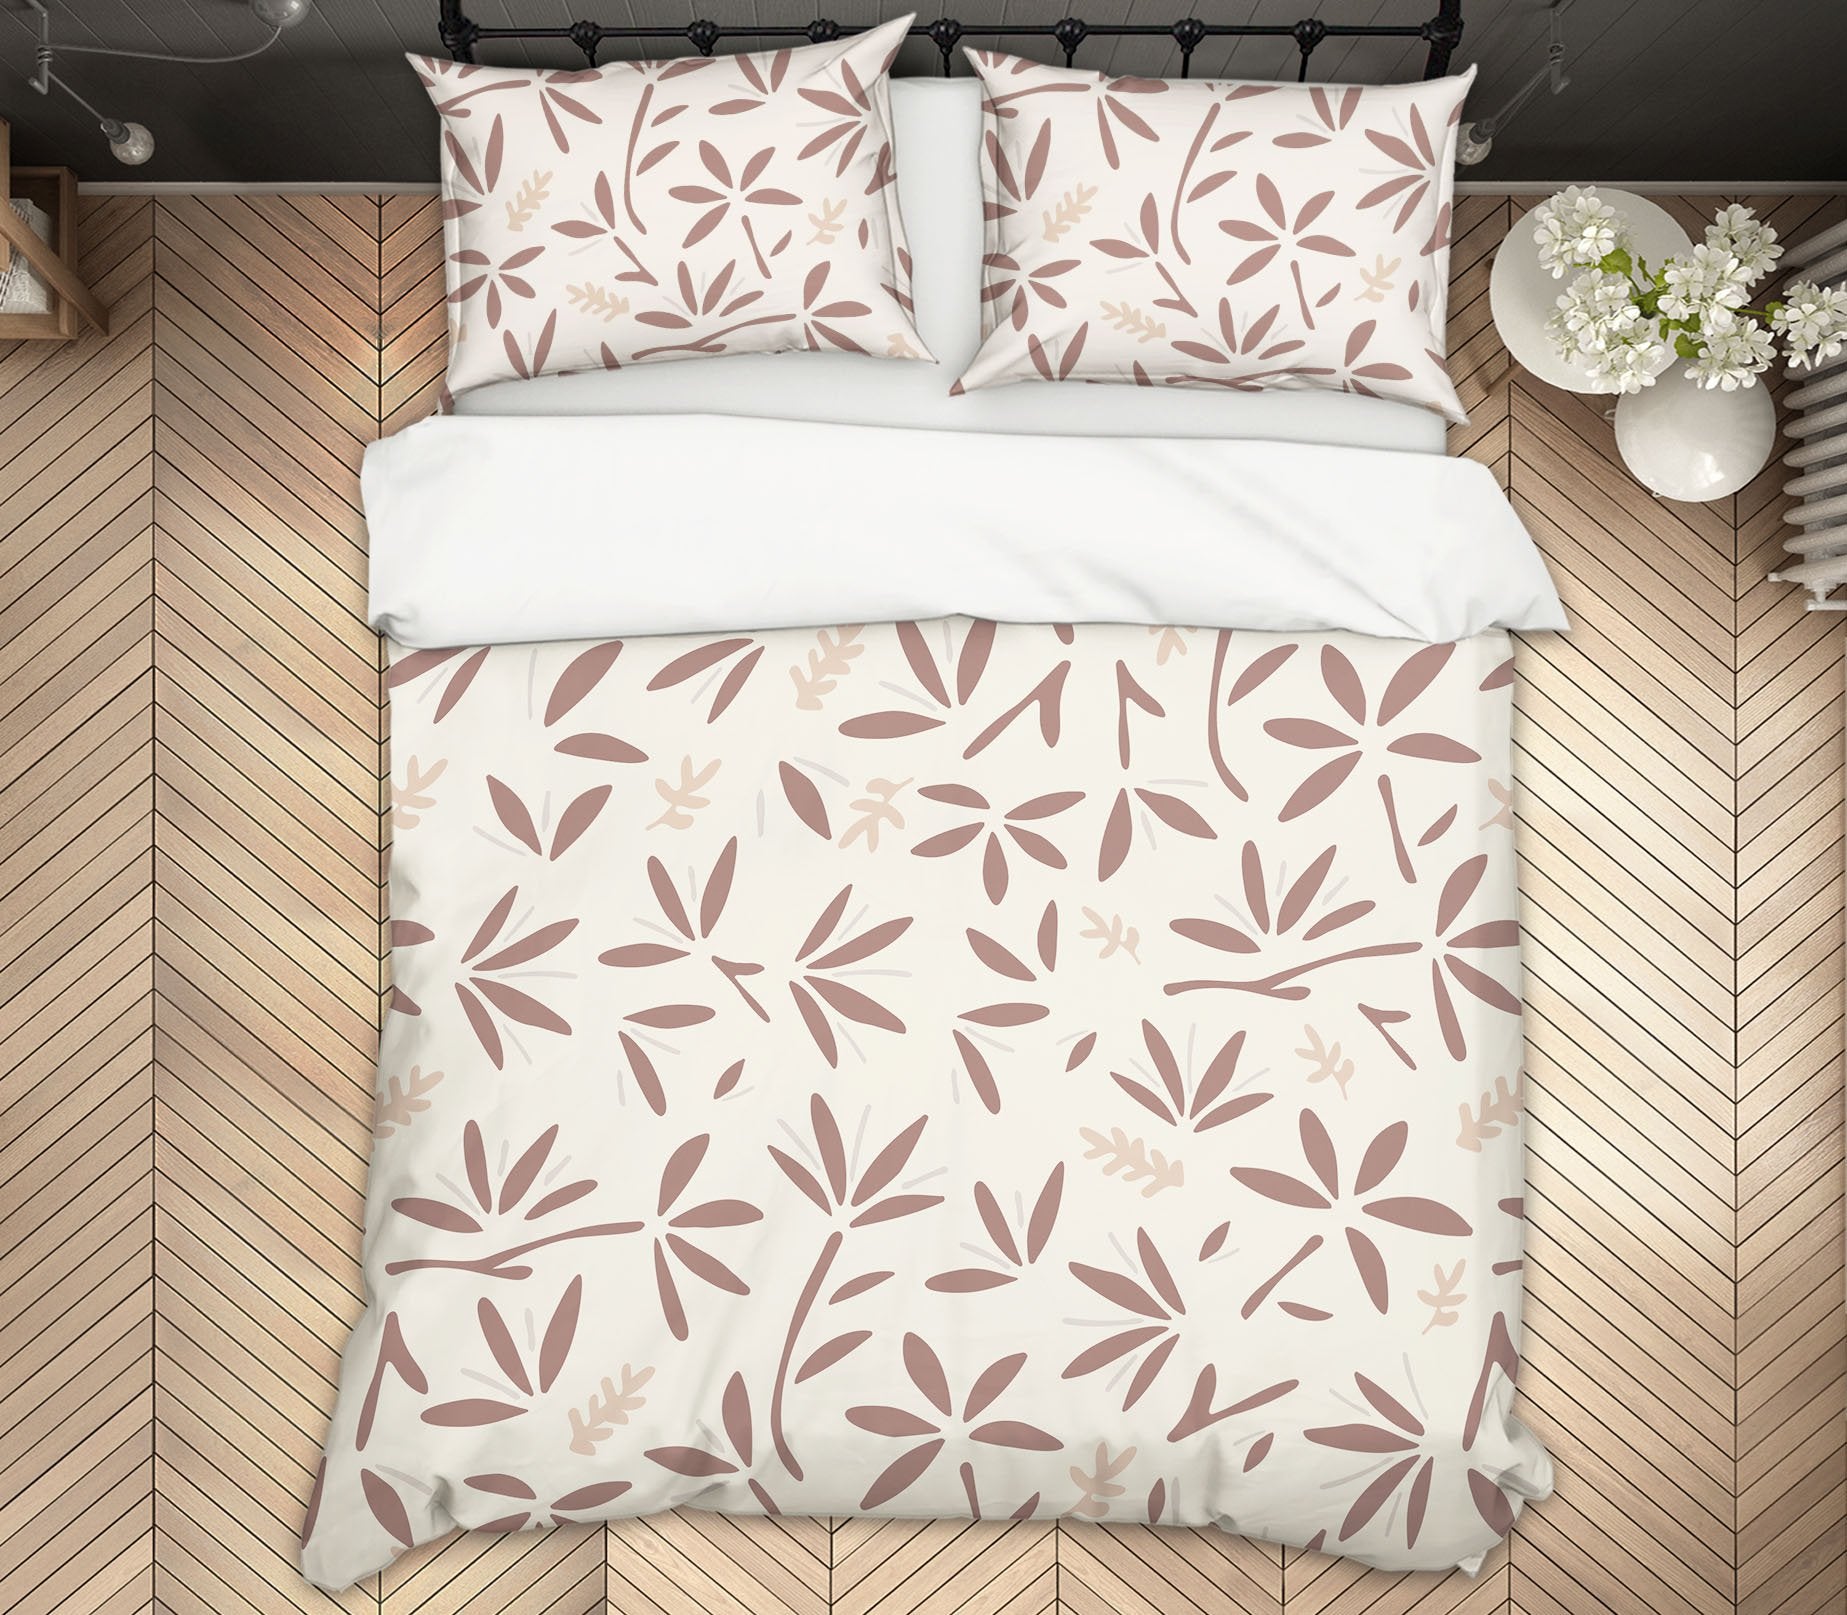 3D Animal Footprints 2107 Jillian Helvey Bedding Bed Pillowcases Quilt Quiet Covers AJ Creativity Home 